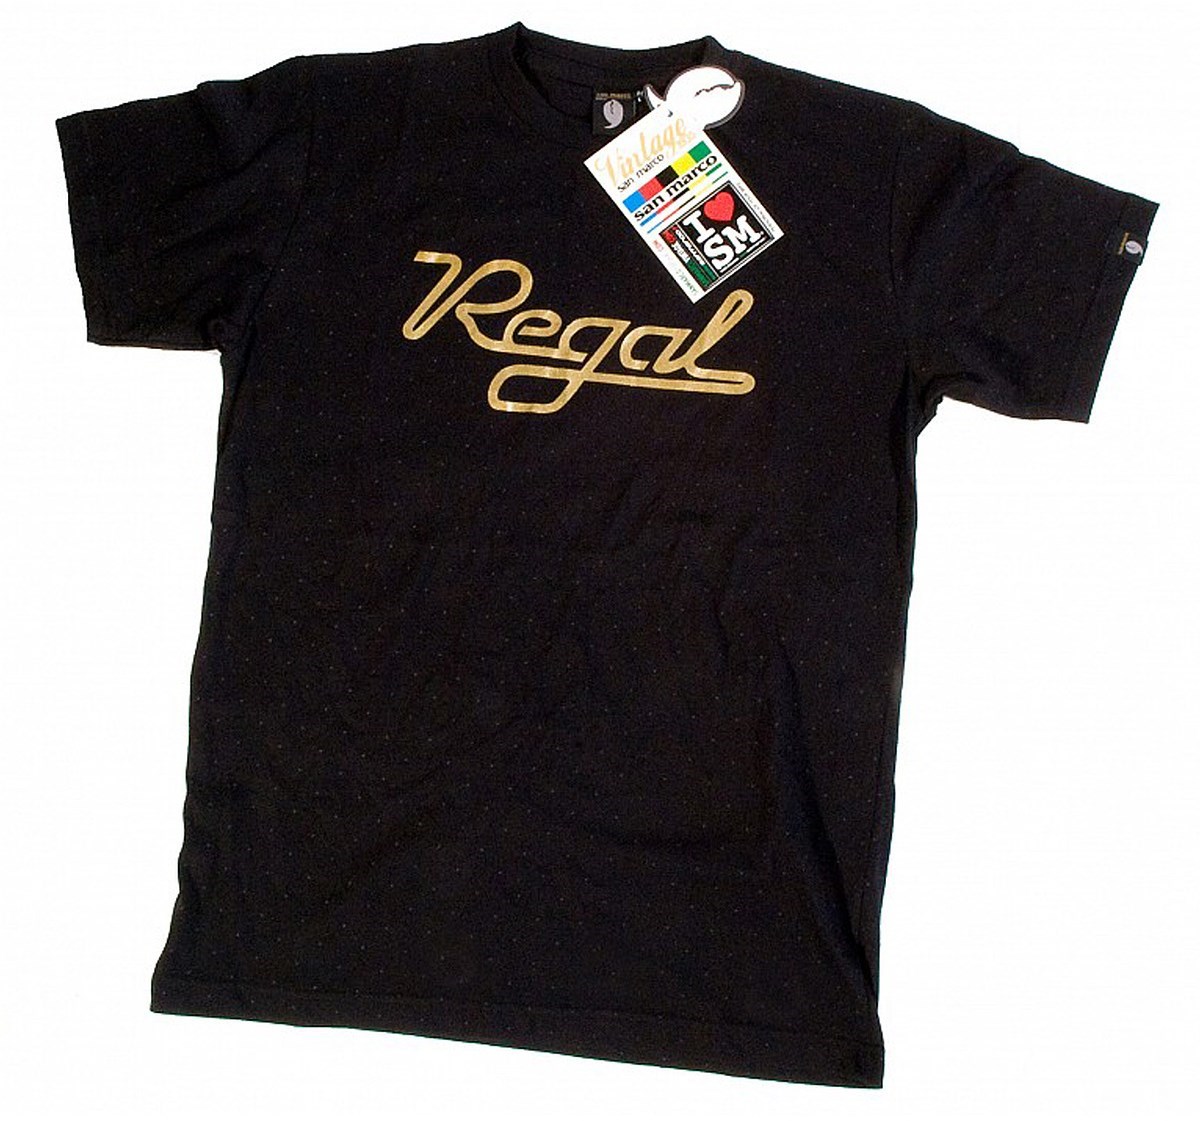 Selle San Marco Regal T-Shirt product image